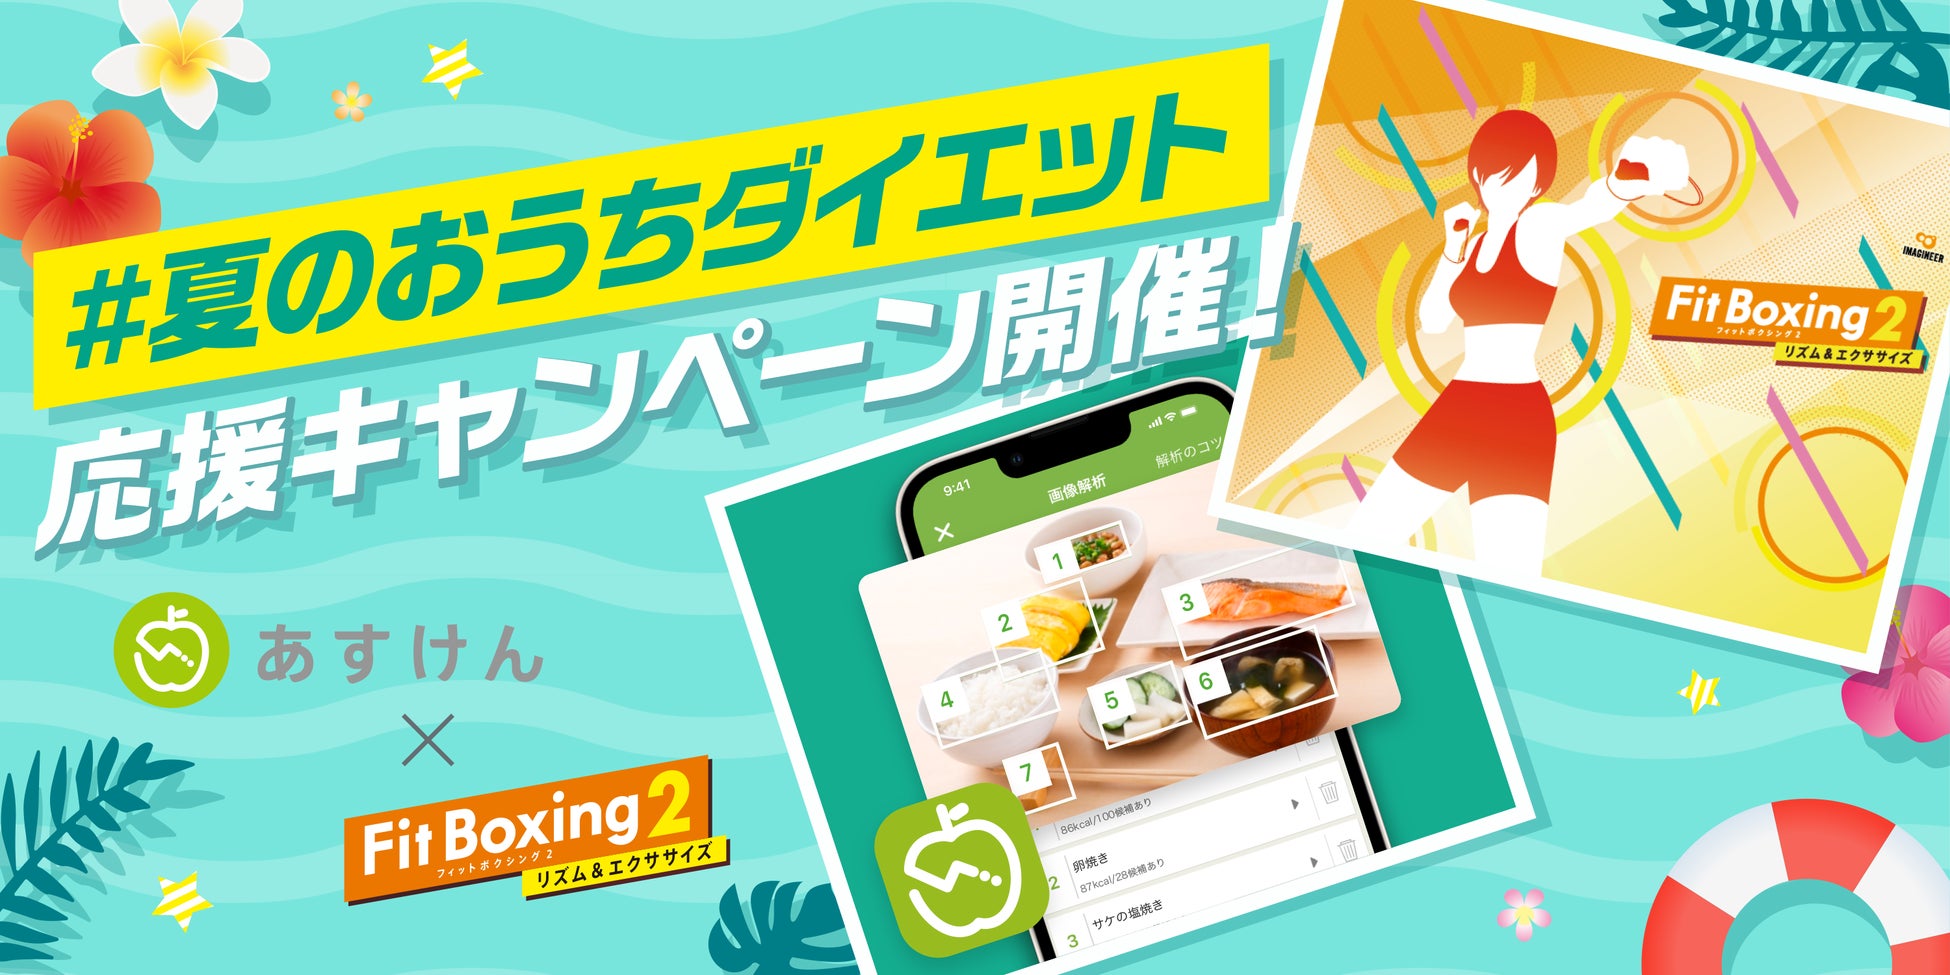 AI食事管理アプリ『あすけん』と大人気ゲームソフトNintendo Switch™『Fit Boxing 2 -リズム＆エクササイズ-』#夏のおうちダイエット 応援キャンペーンを実施